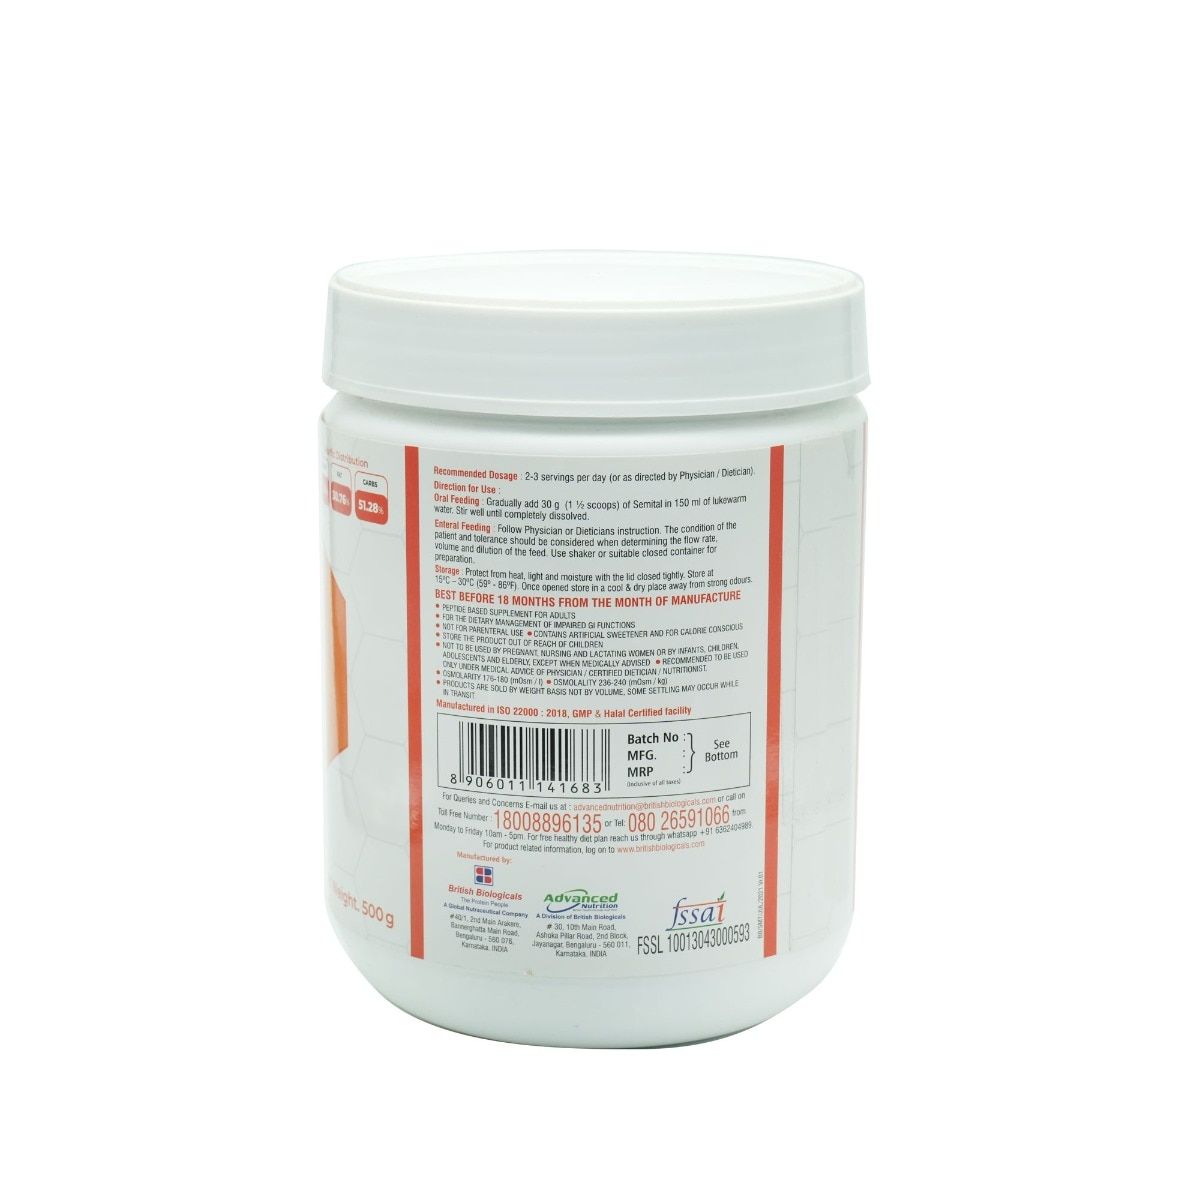 Semital Advanced Vanilla Flavour Powder, 500 gm, Pack of 1 